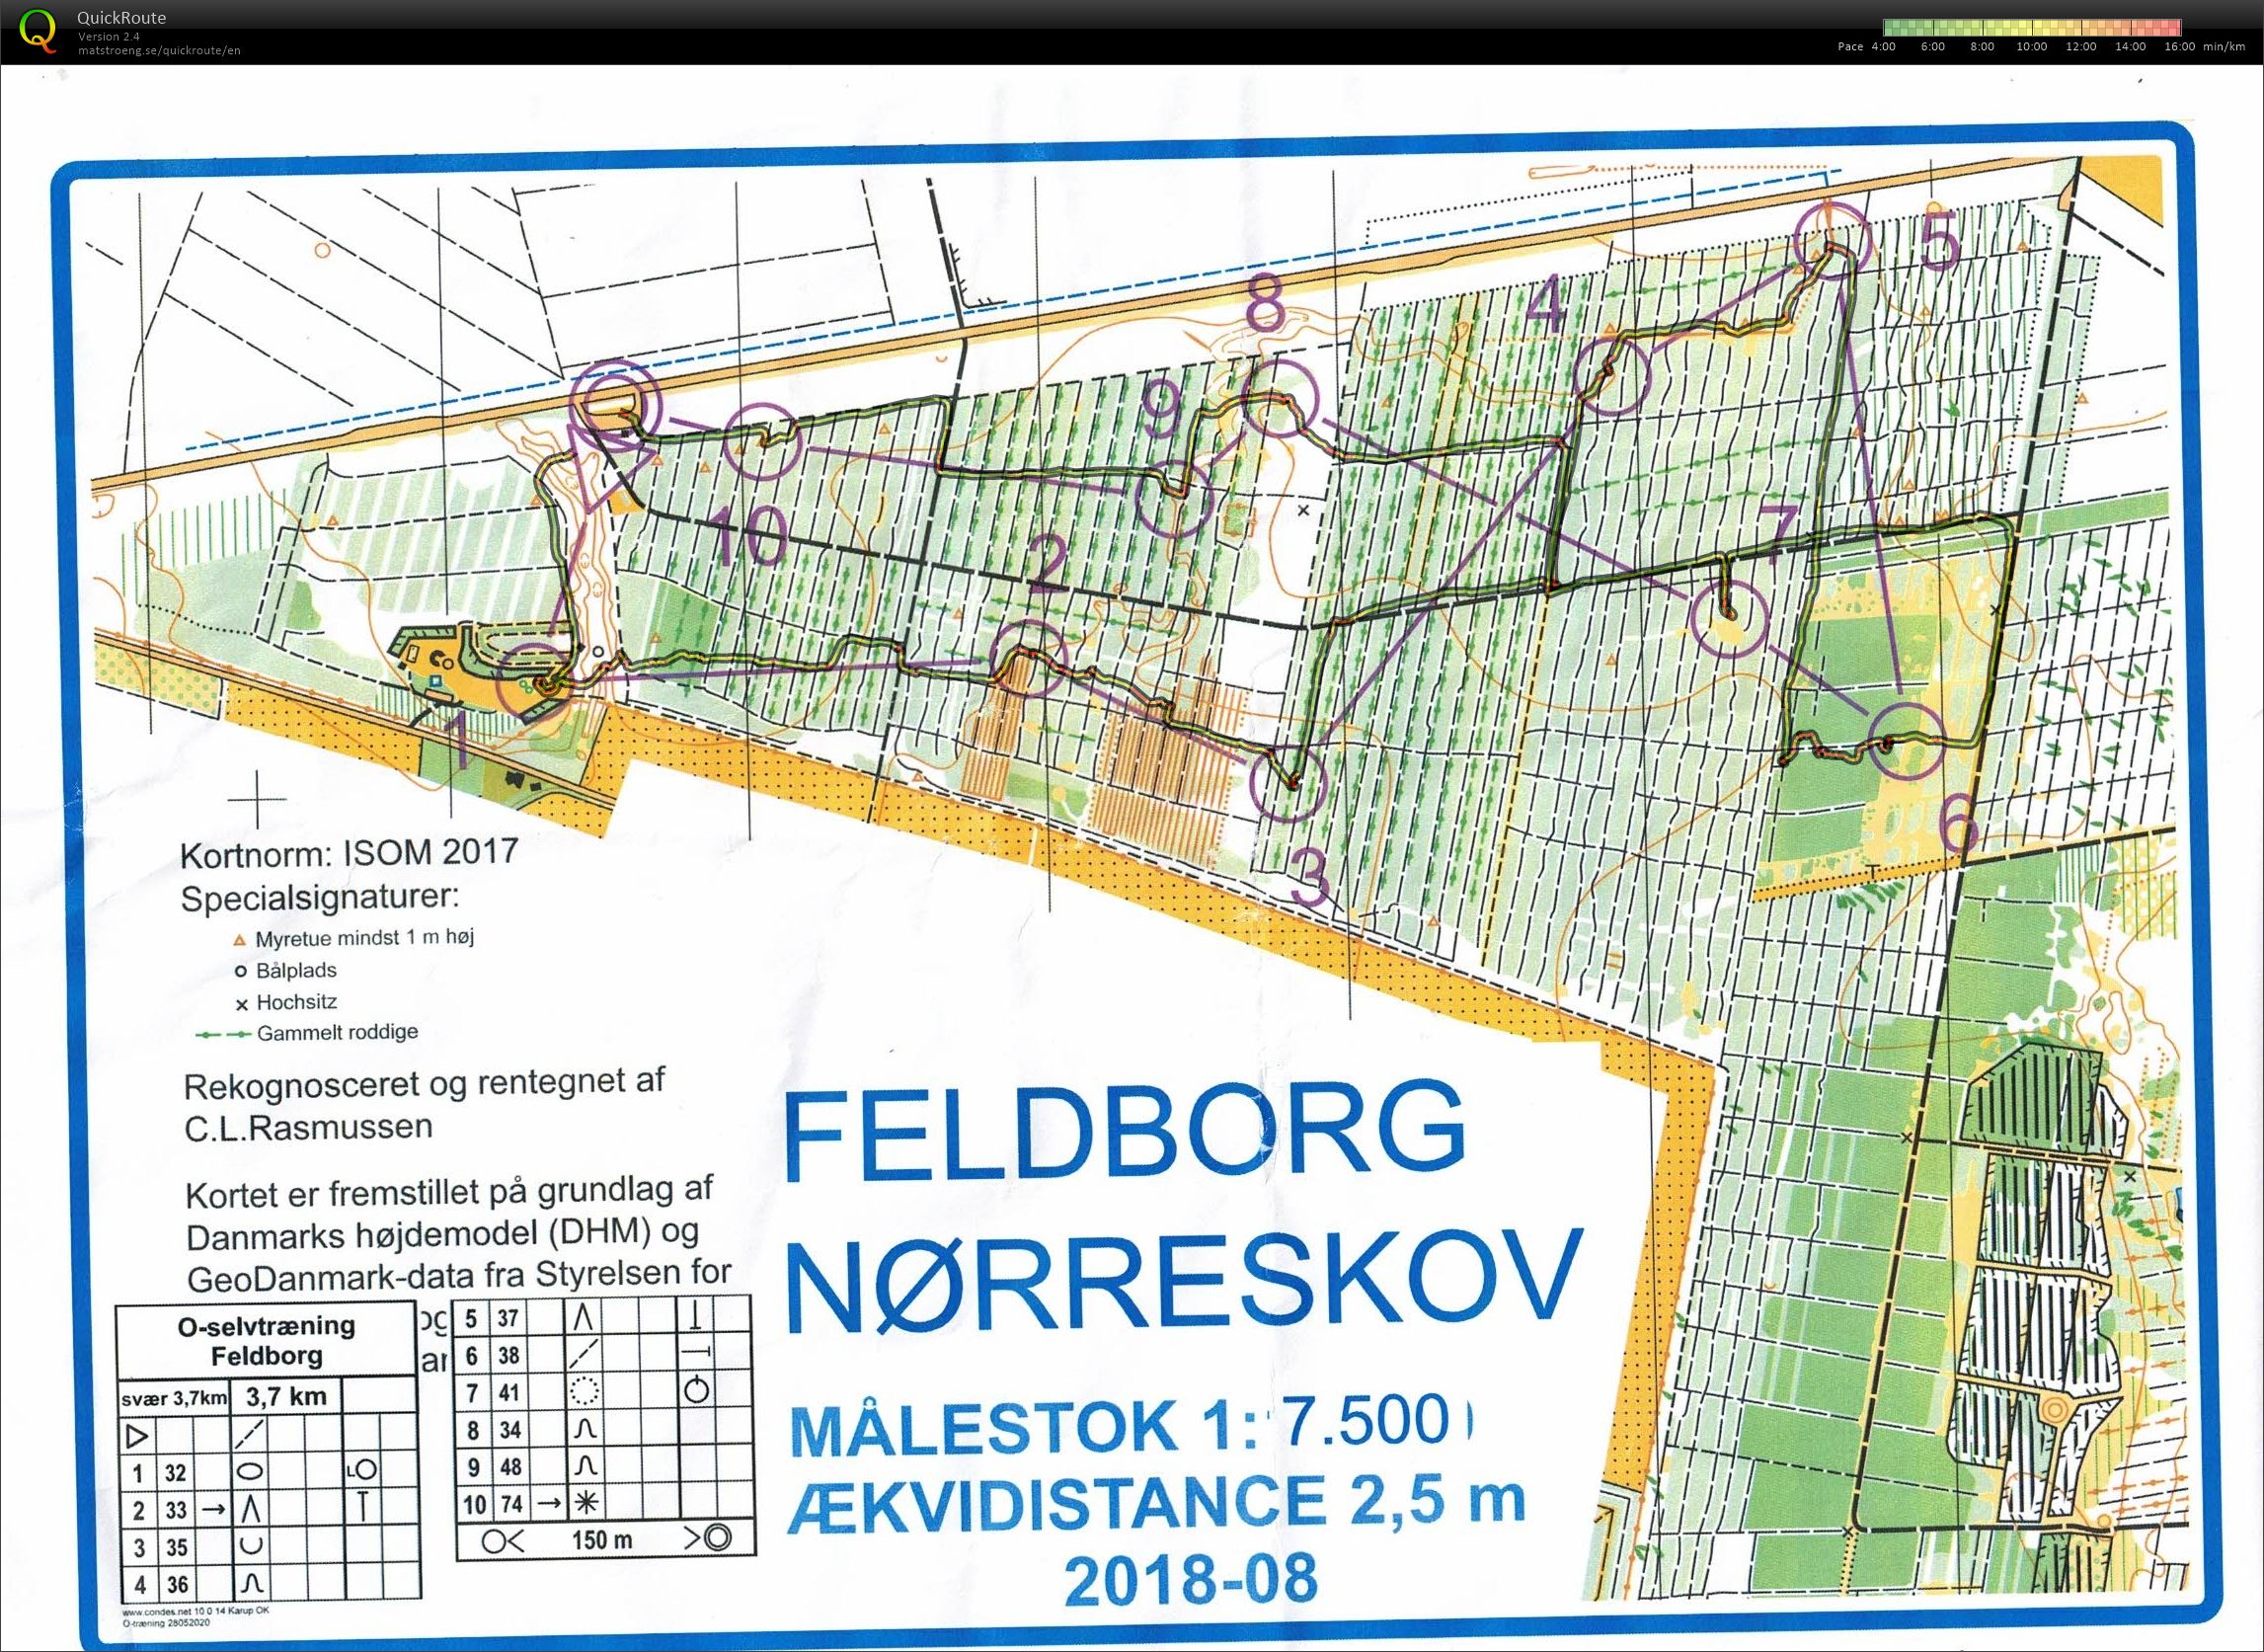 Feldborg Nørreskov, Bane 3,7 km, Pia Gade, 300520 (30/05/2020)